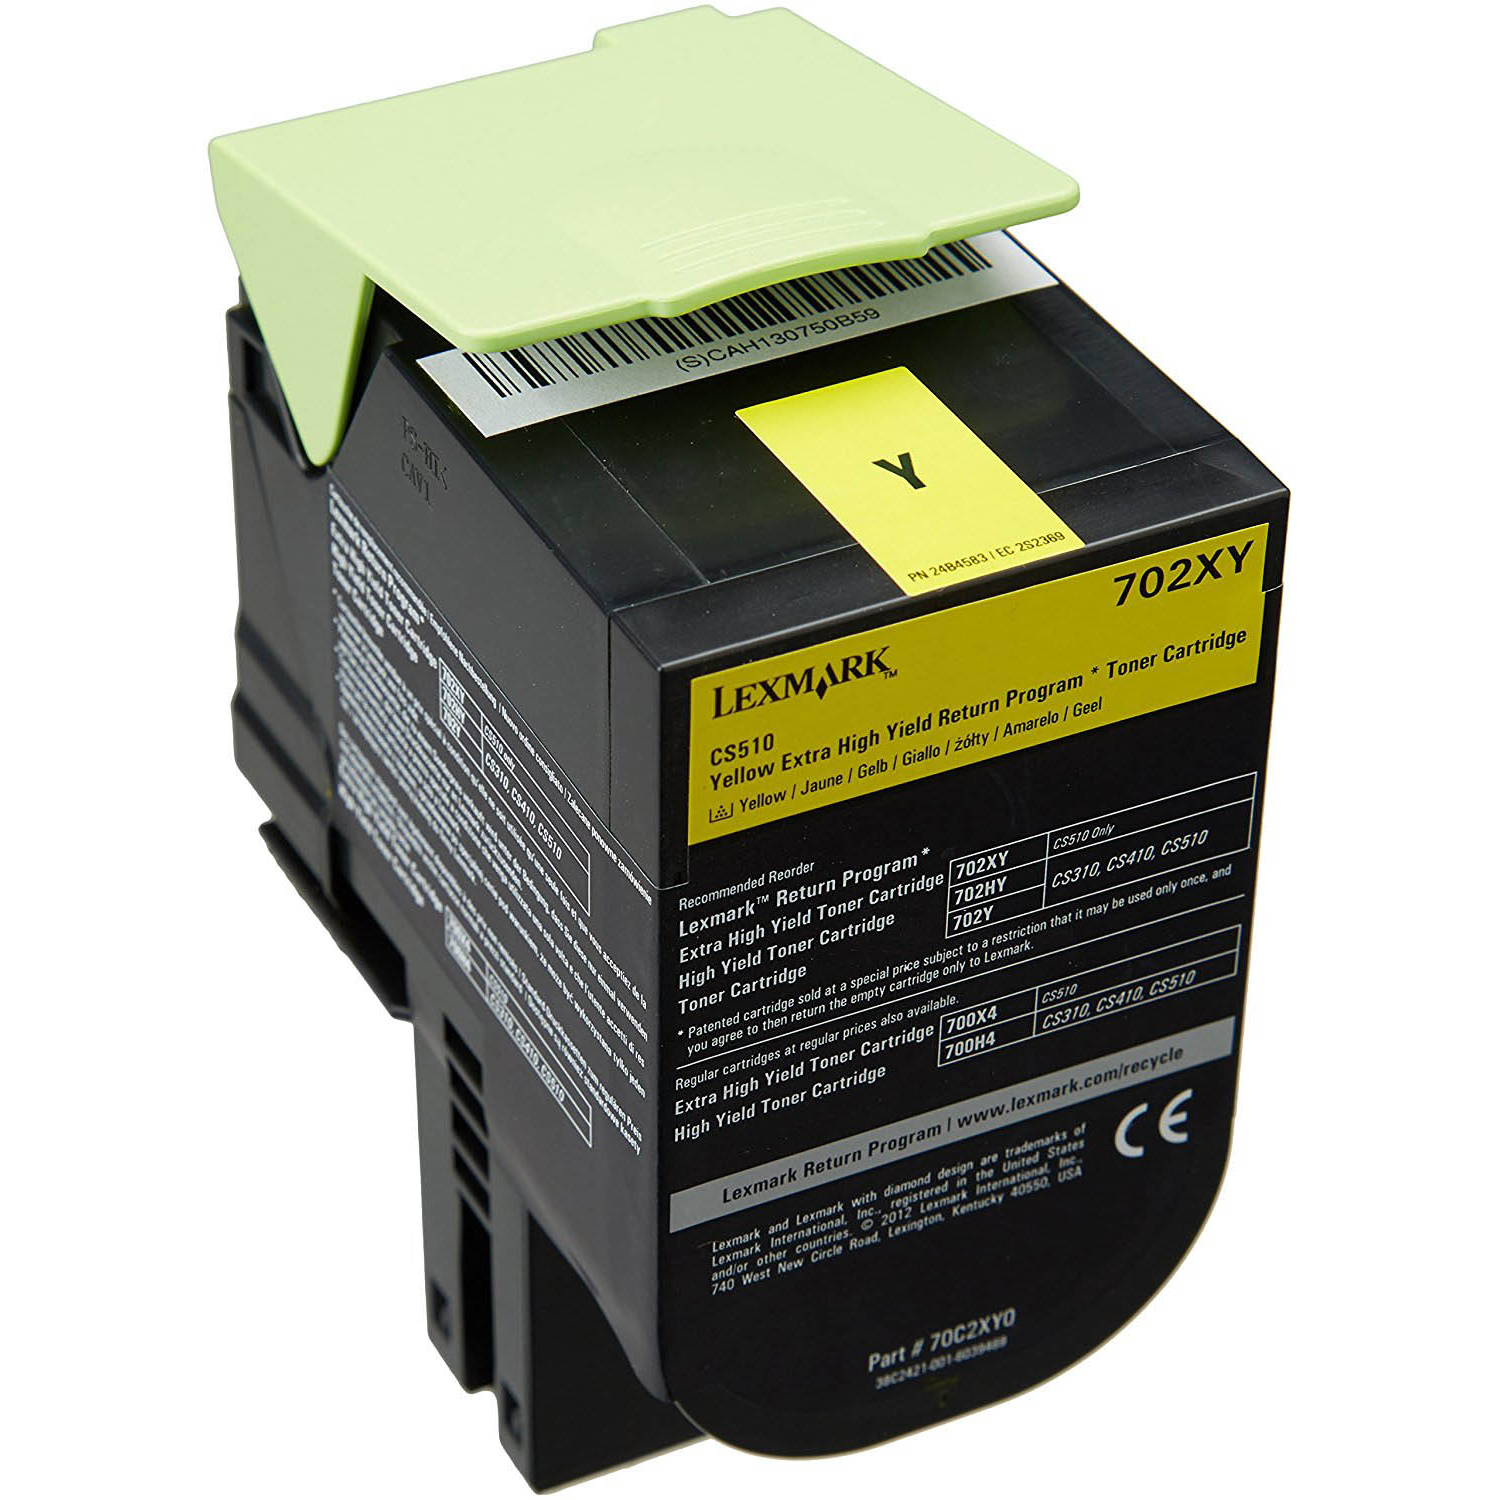 Original Lexmark 702XY Yellow Extra High Capacity Toner Cartridge (70C2XY0)